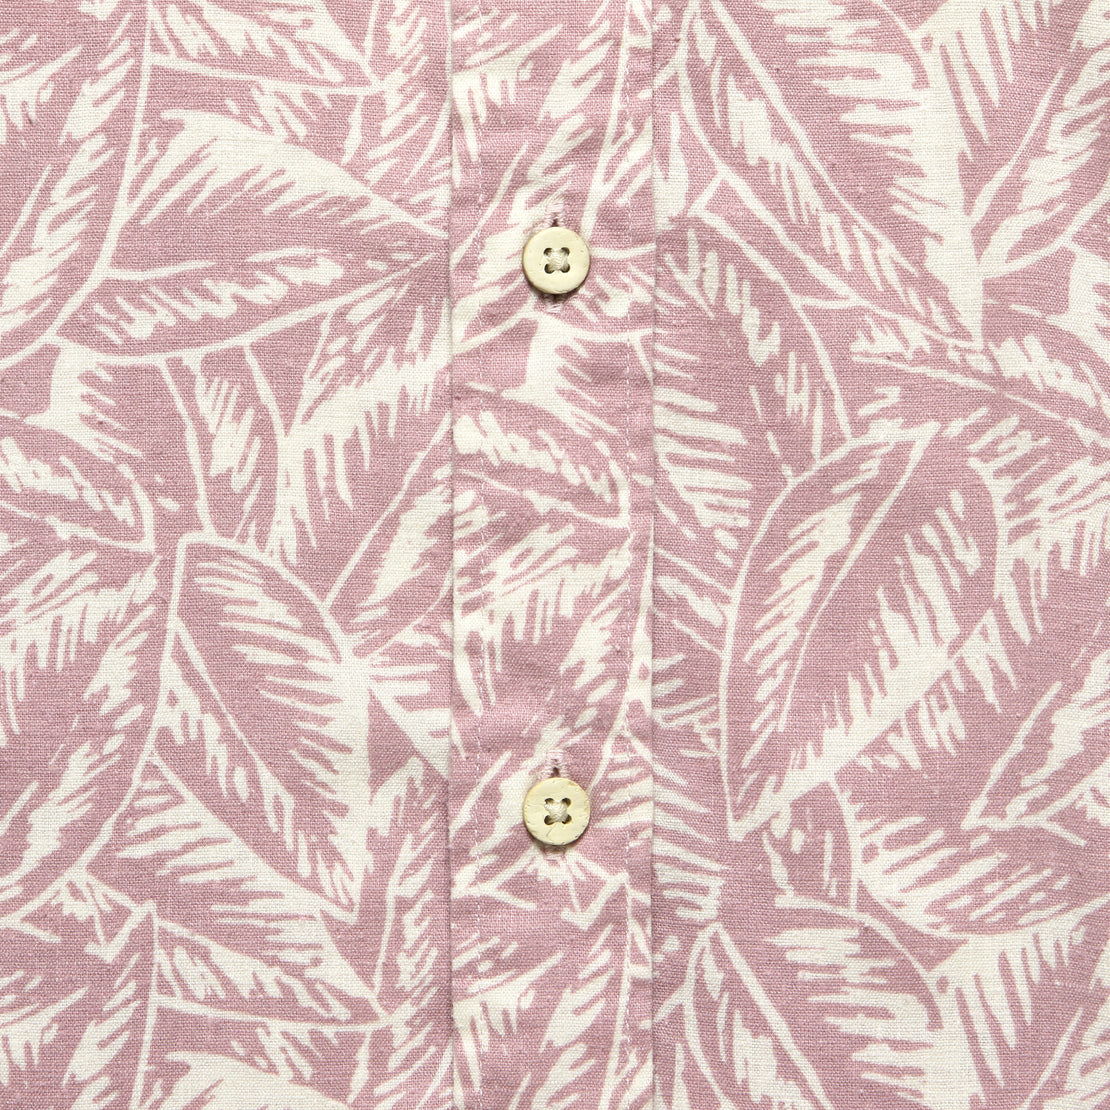 Breeze Shirt - Quartz Leaf Print - Faherty - STAG Provisions - Tops - S/S Woven - Floral